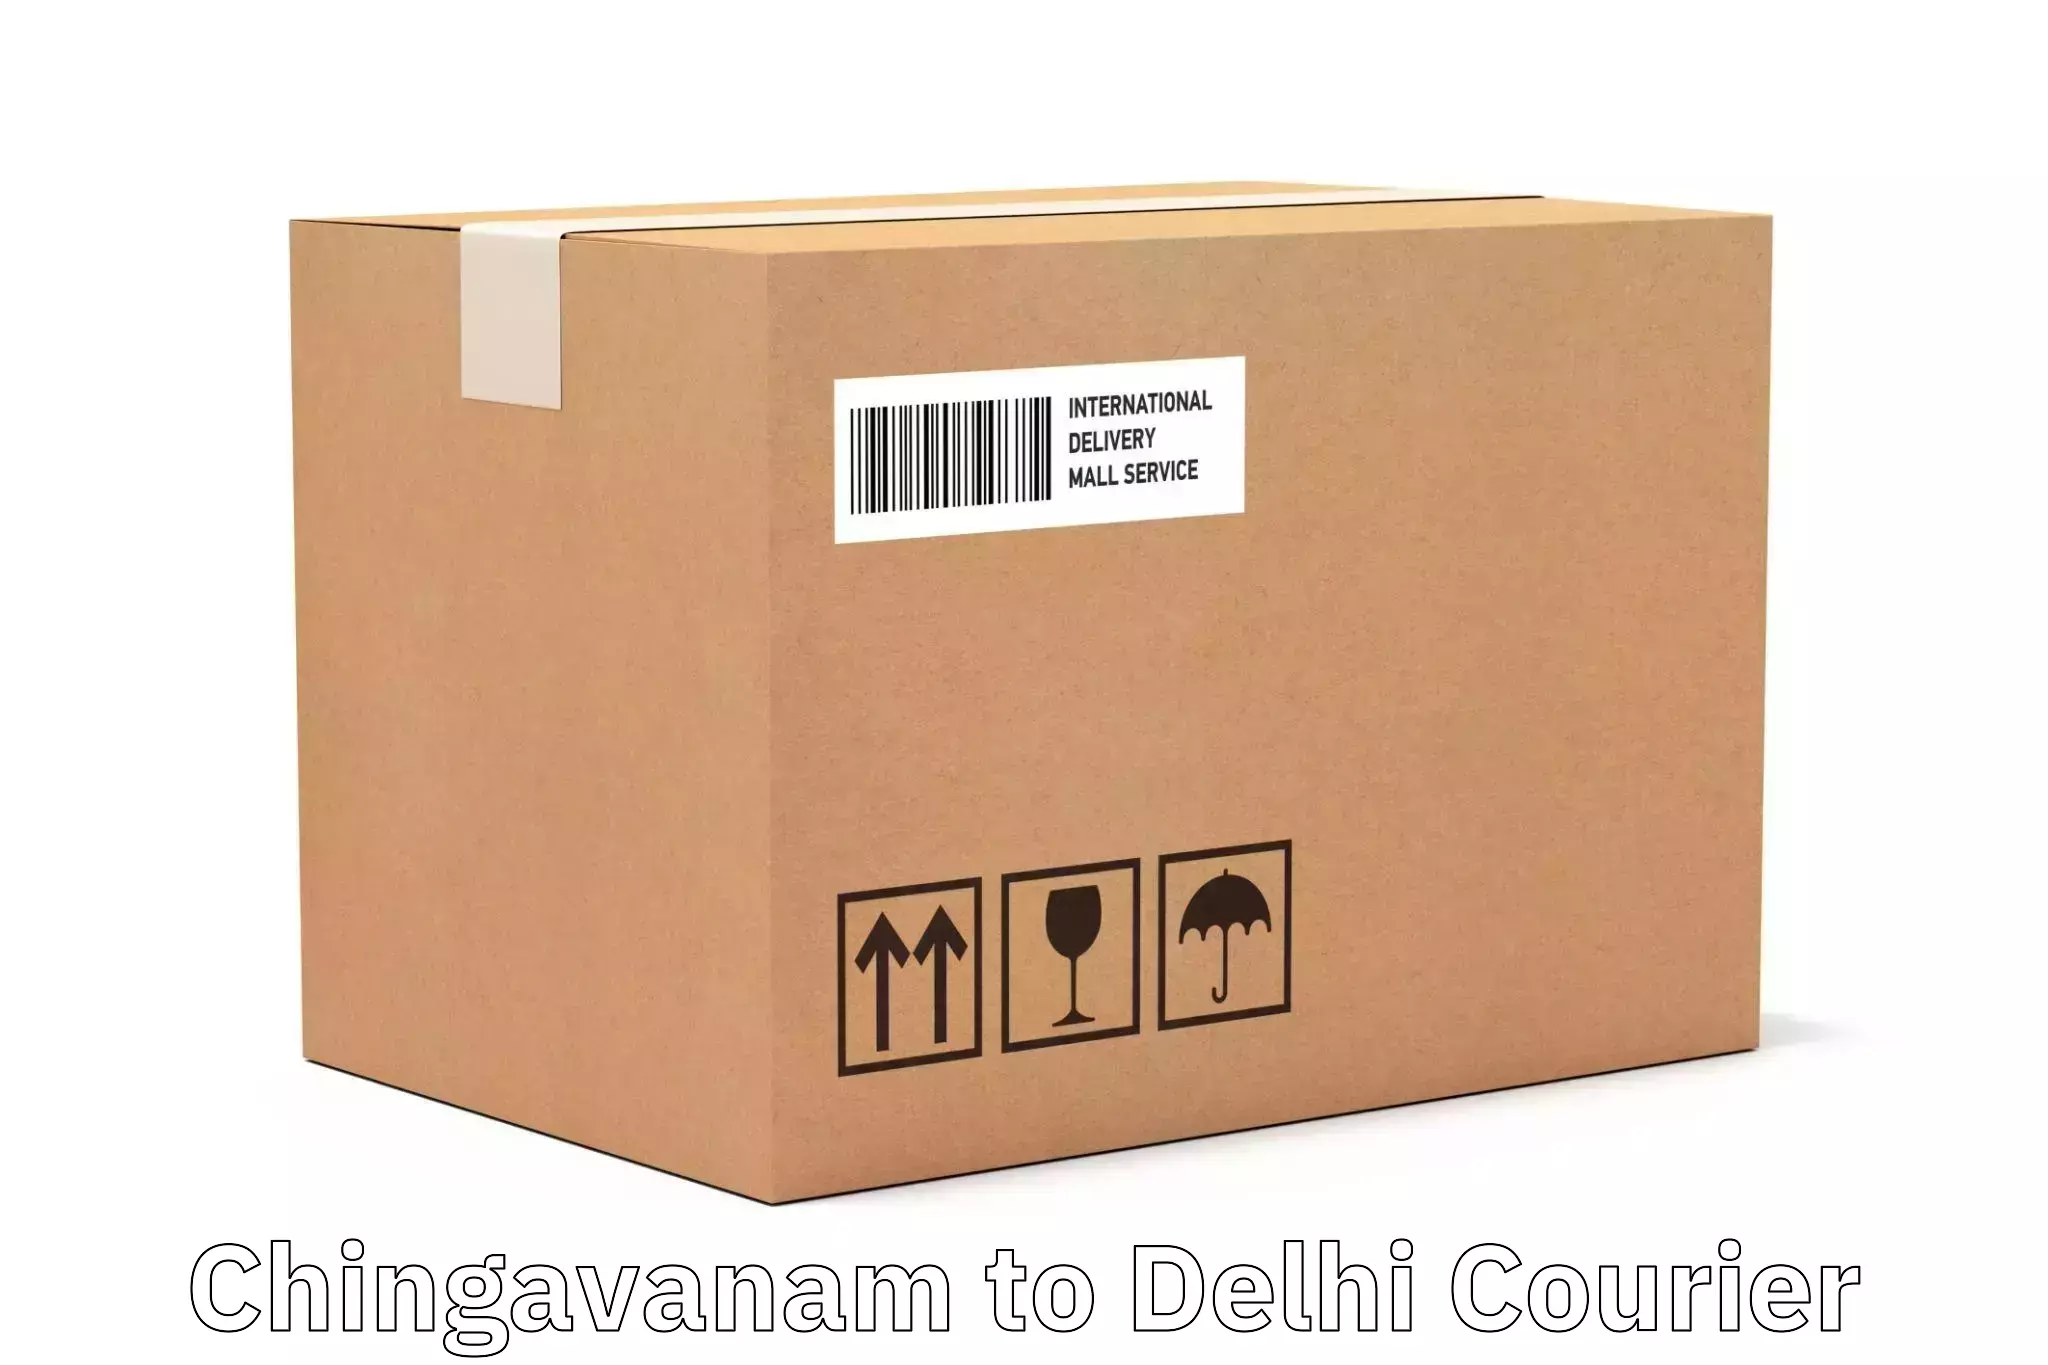 Express delivery capabilities Chingavanam to Sarojini Nagar